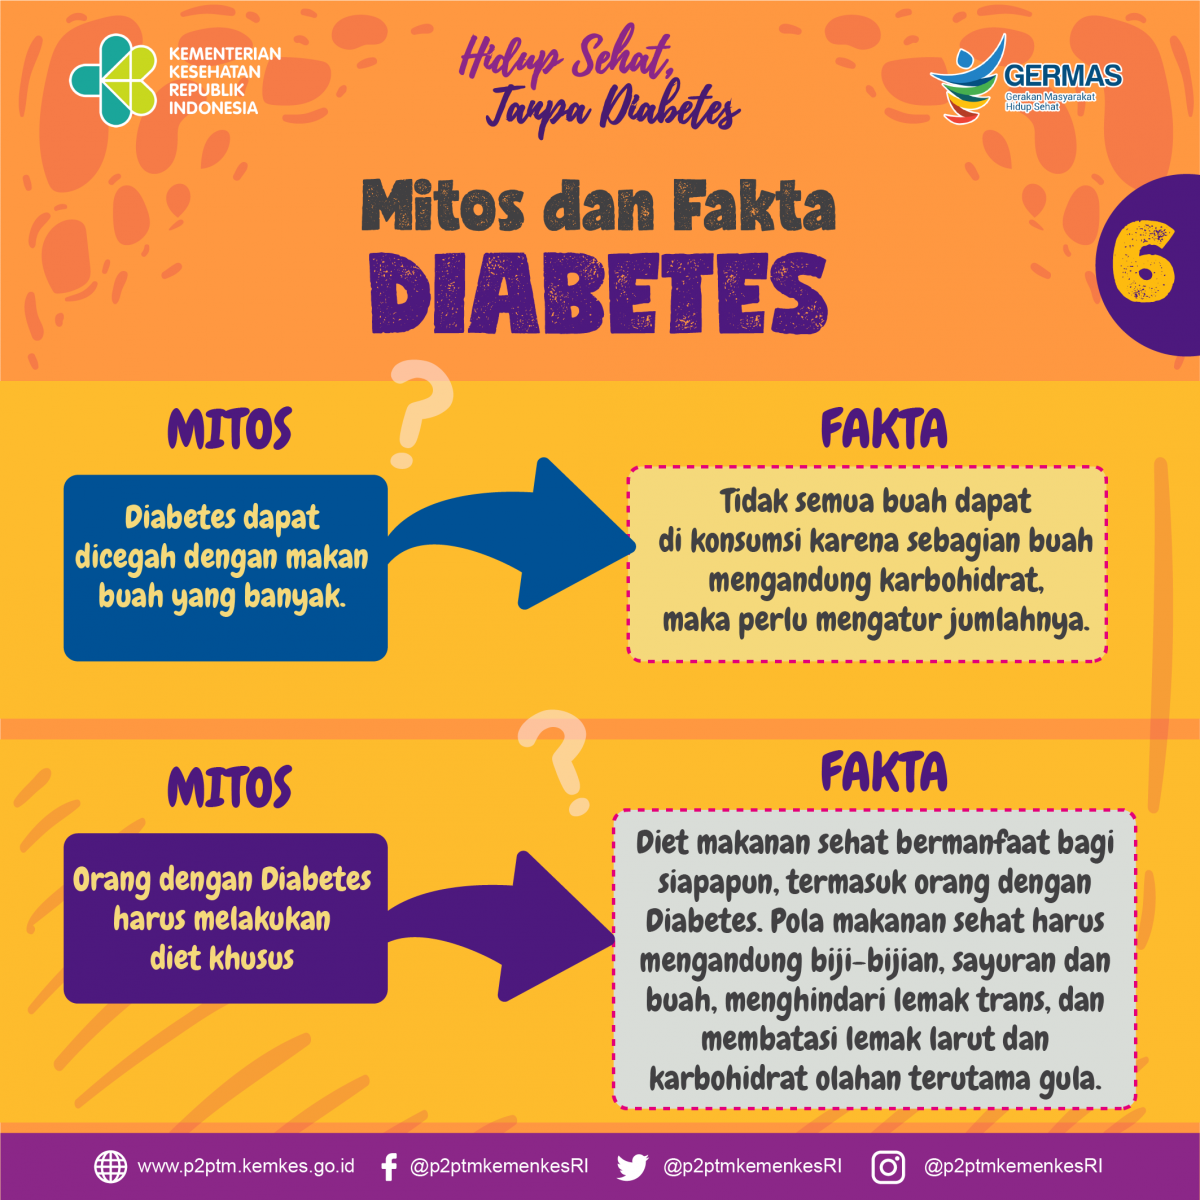 Mitos : Diabetes dapat dicegah dengan makan buah yang banyak